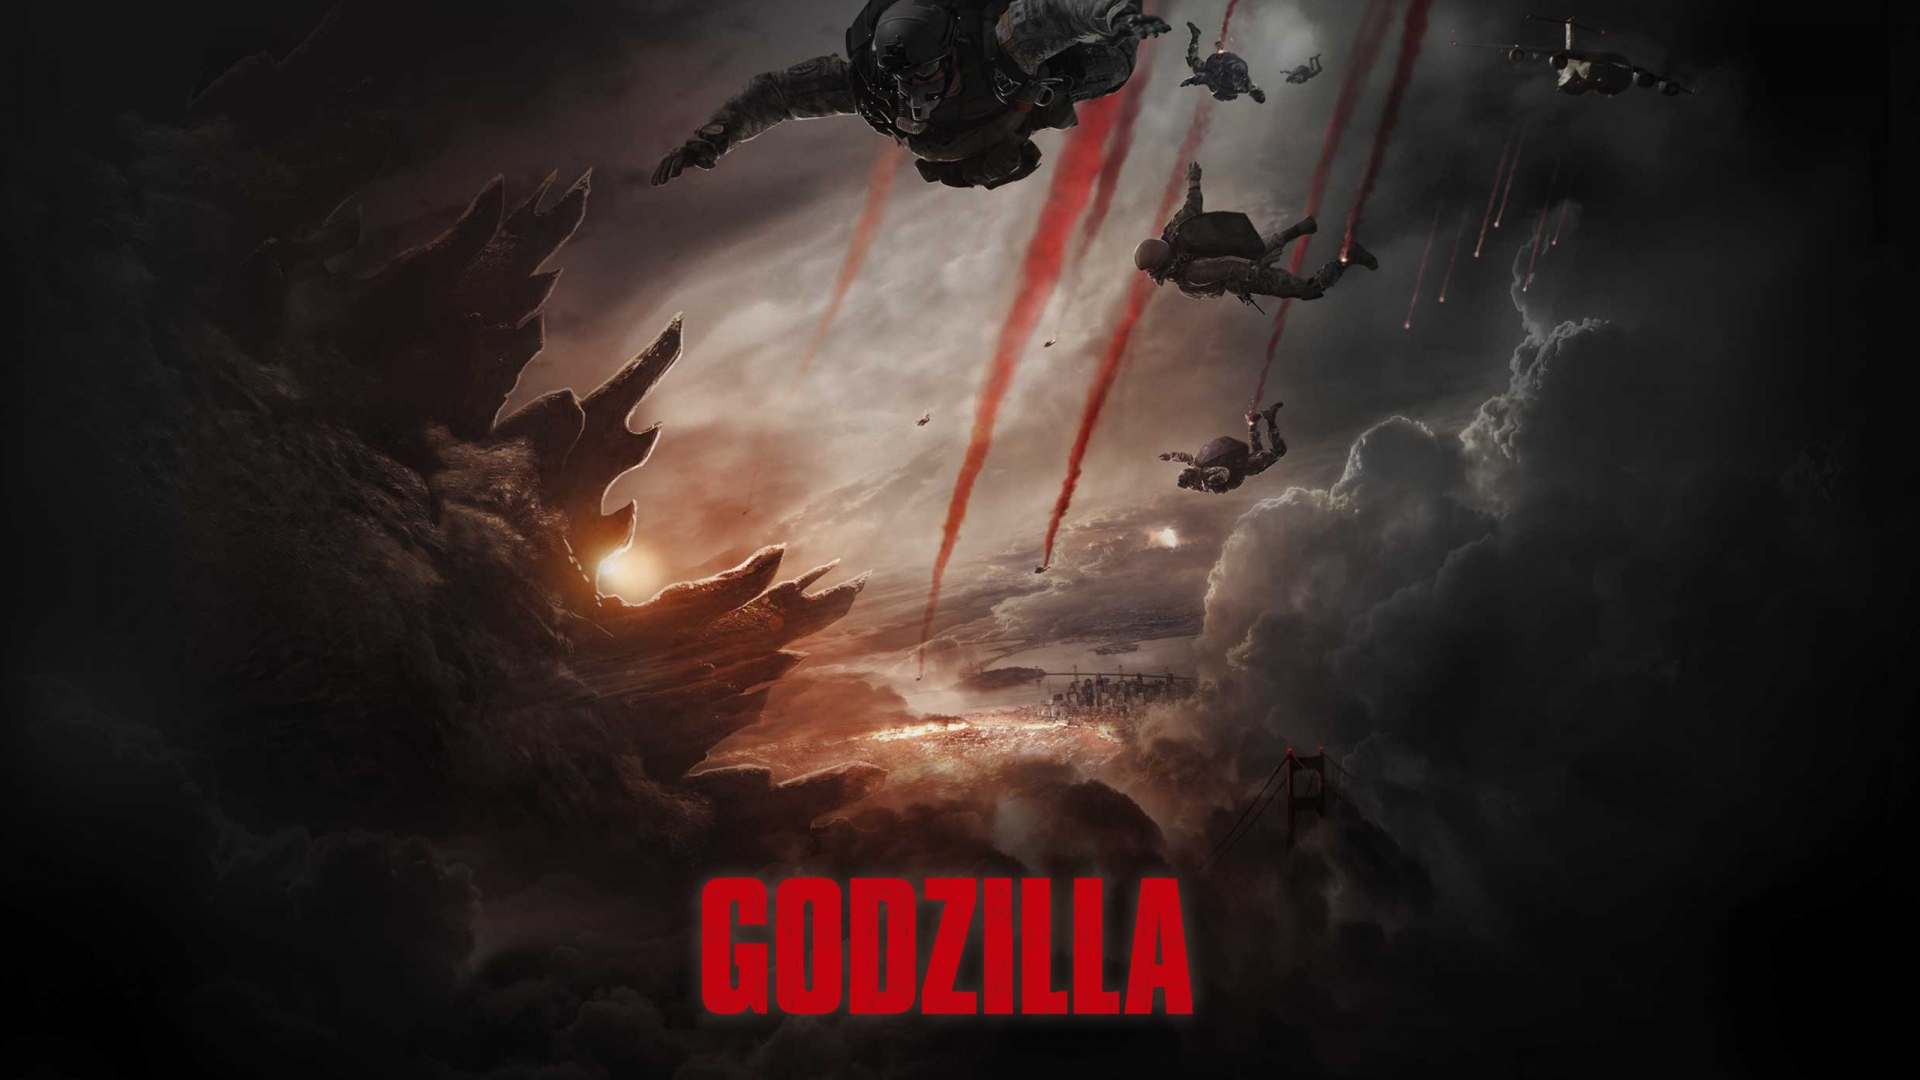 Godzilla 2014 Movie for 1920 x 1080 HDTV 1080p resolution